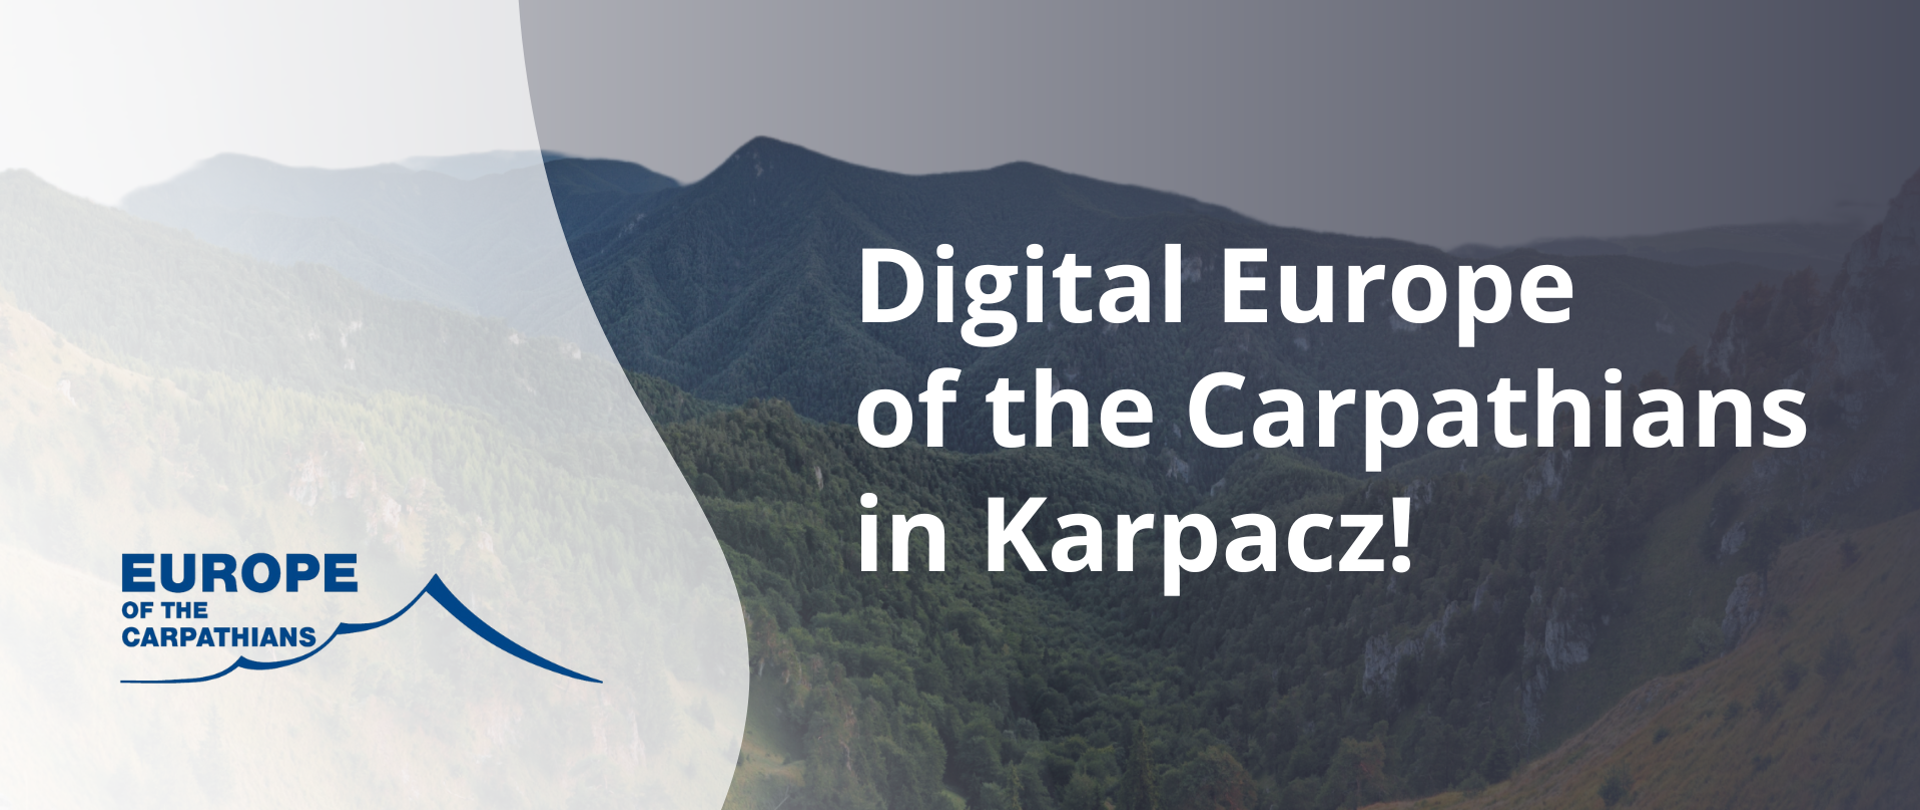 Title: Digital Europe of the Carpathians in Karpacz!